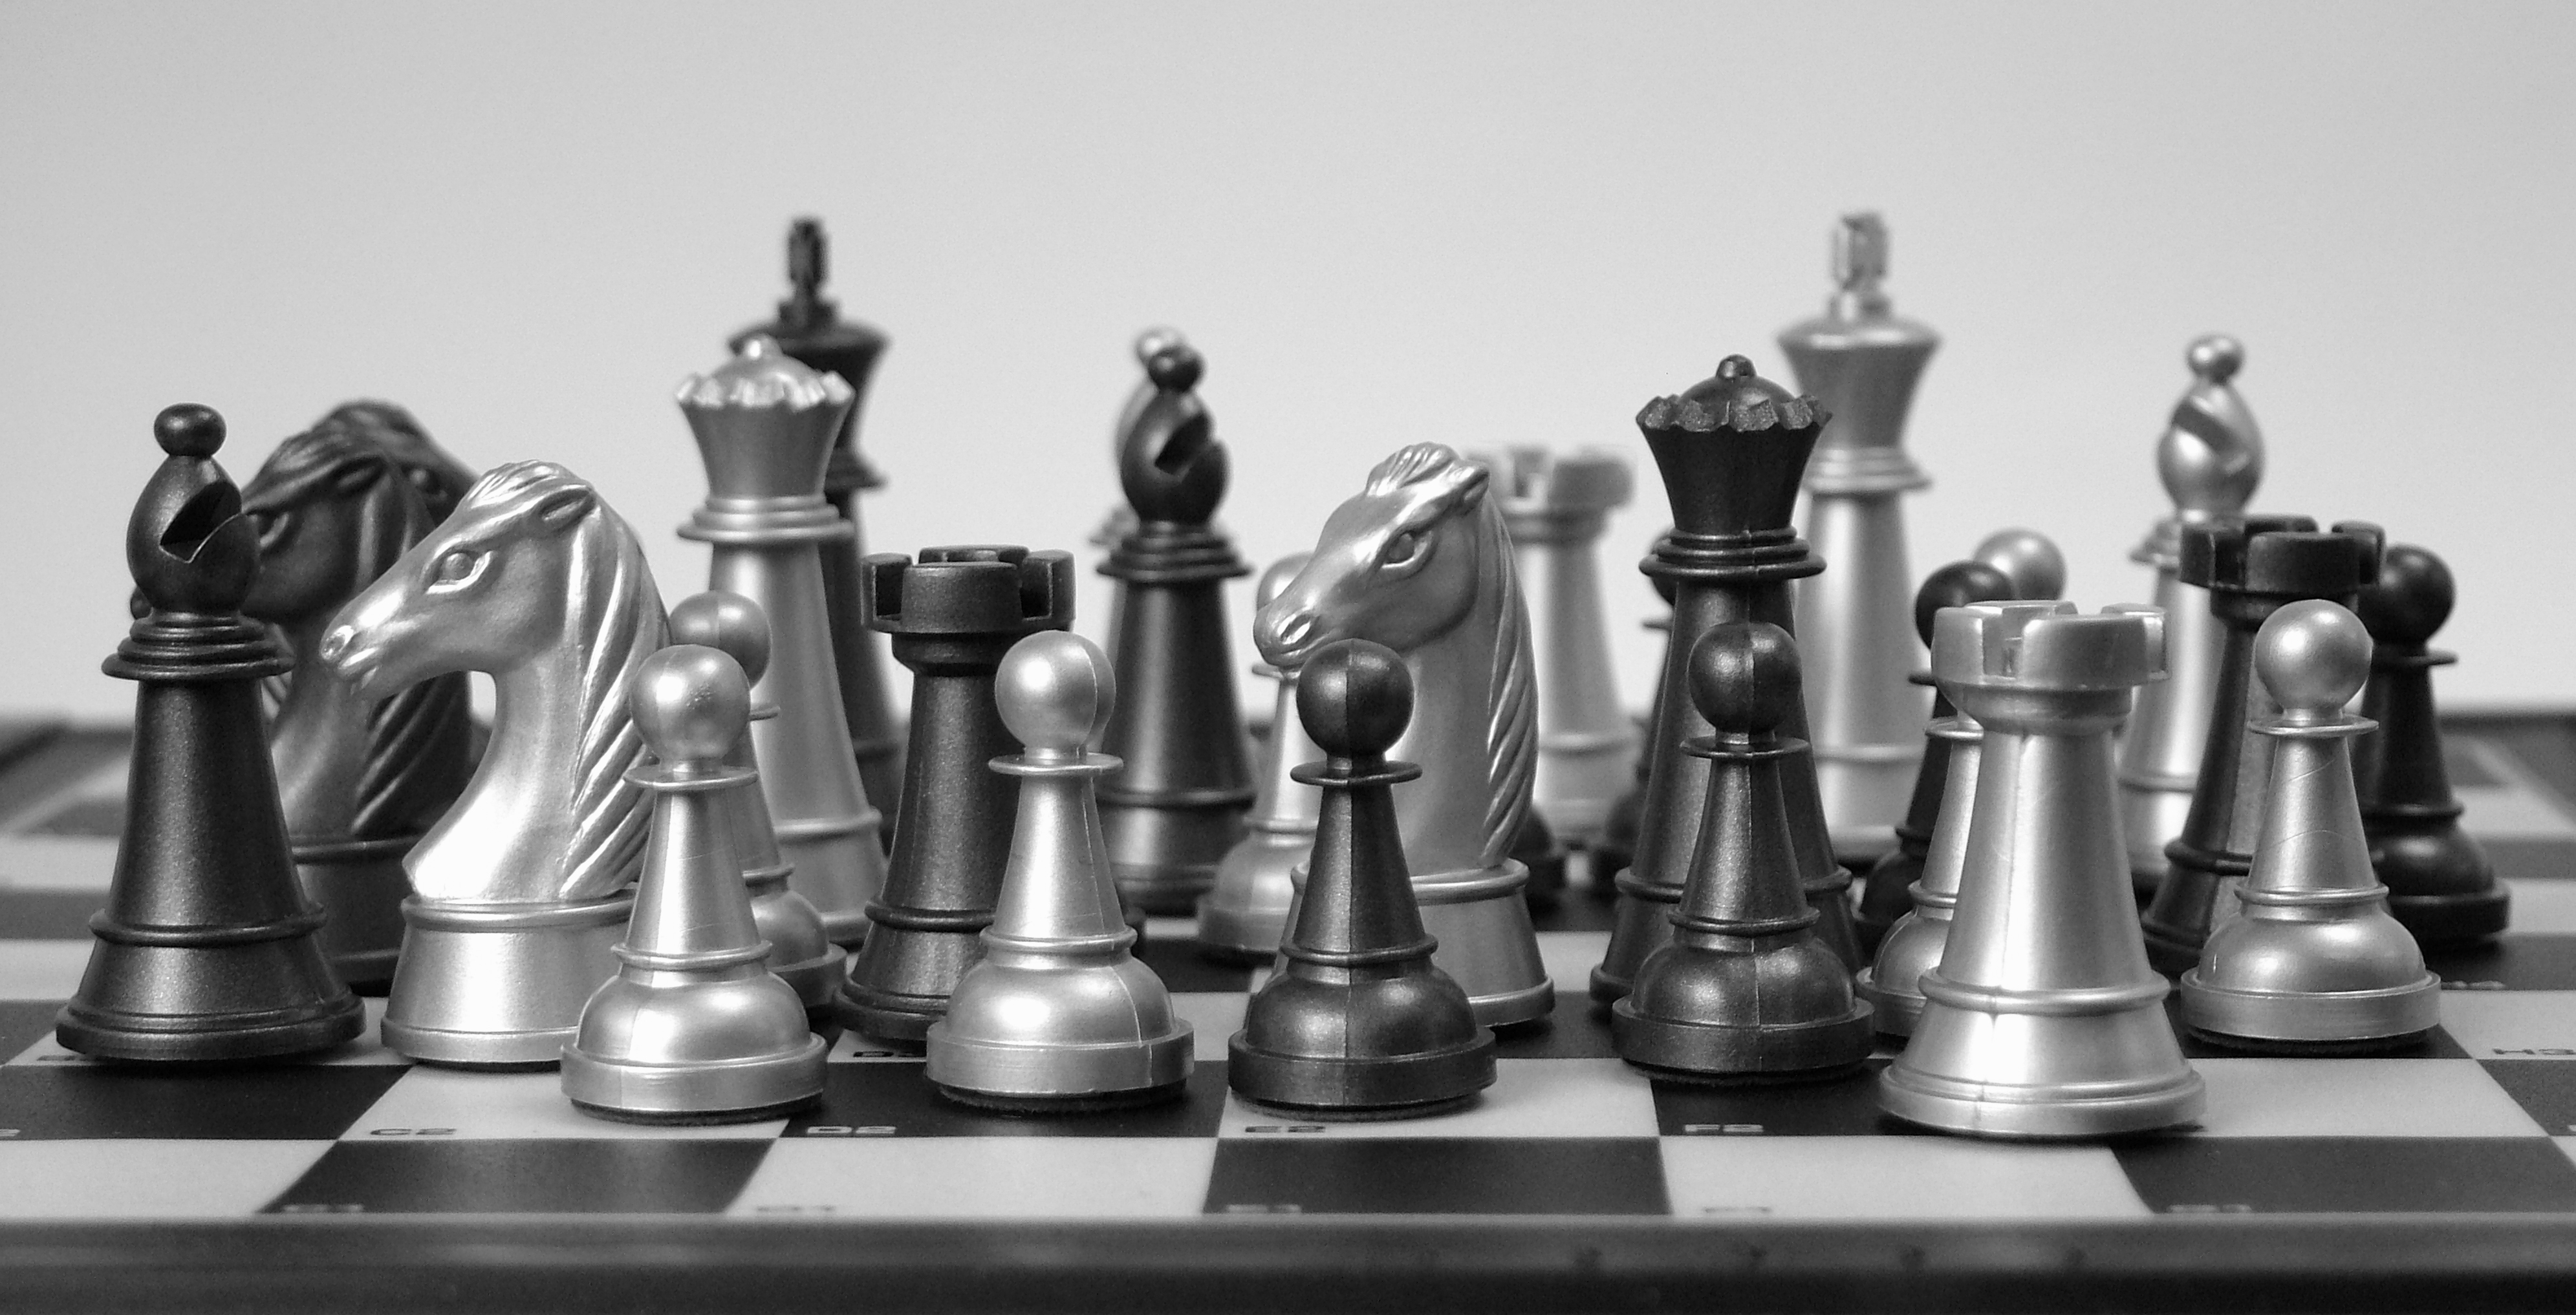 Plastic chess pieces